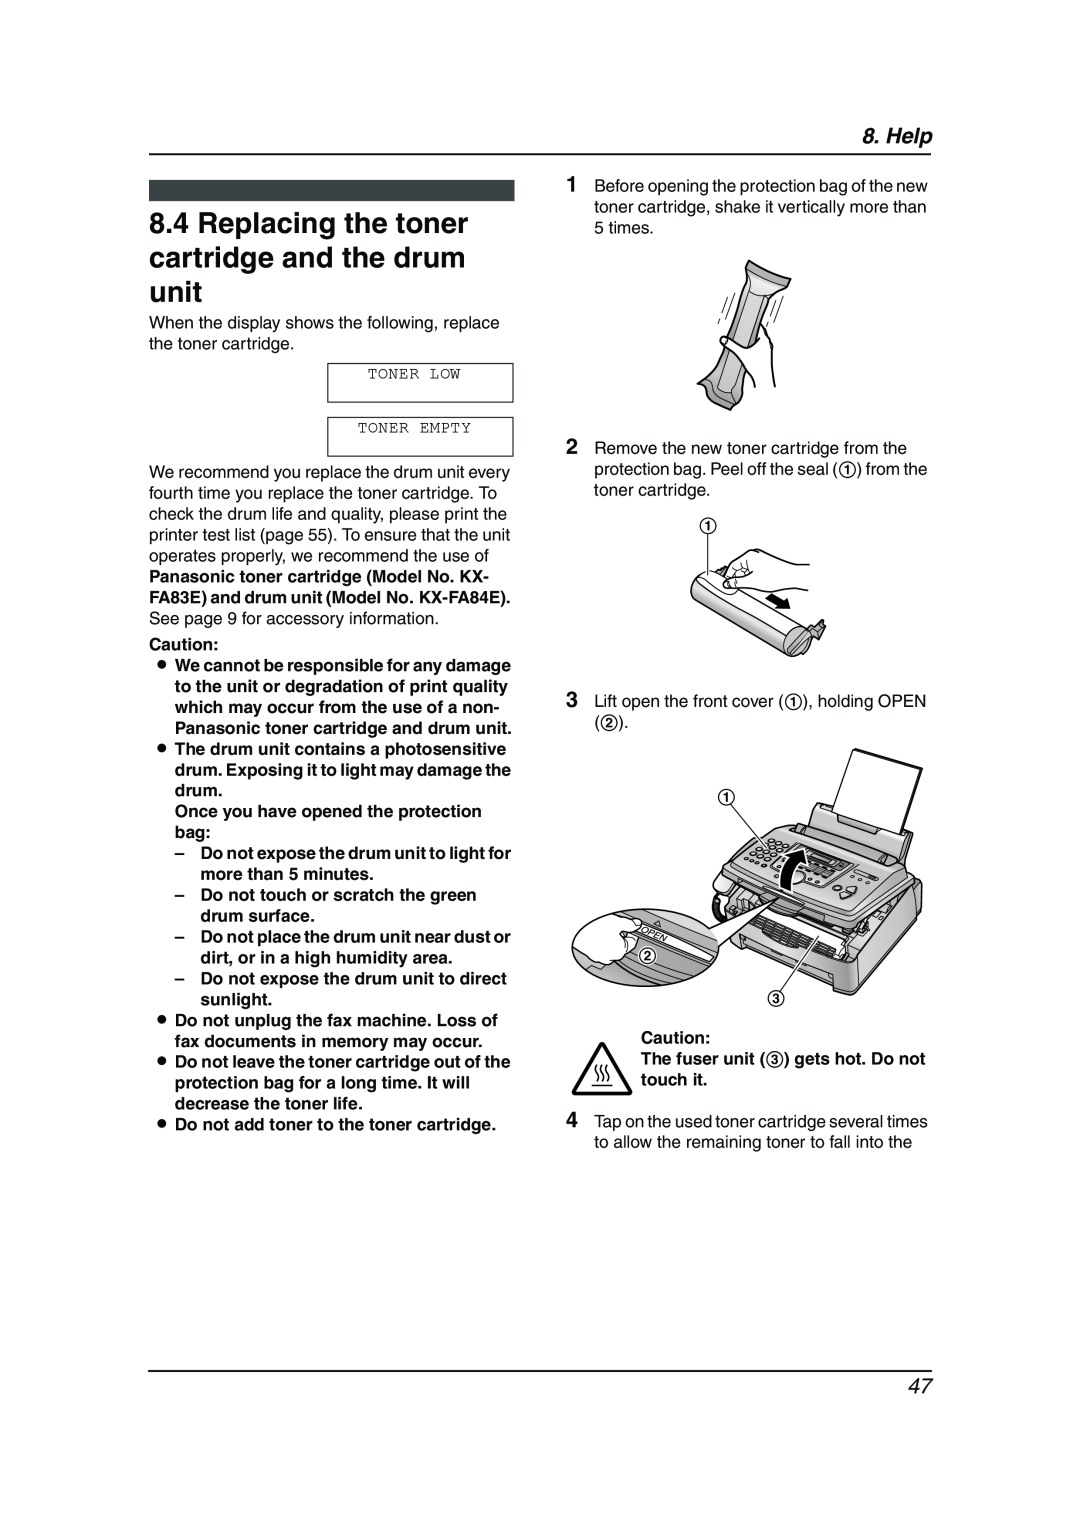 Panasonic KX-FL511AL manual Replacing the toner cartridge and the drum unit, Help, Toner Low Toner Empty 